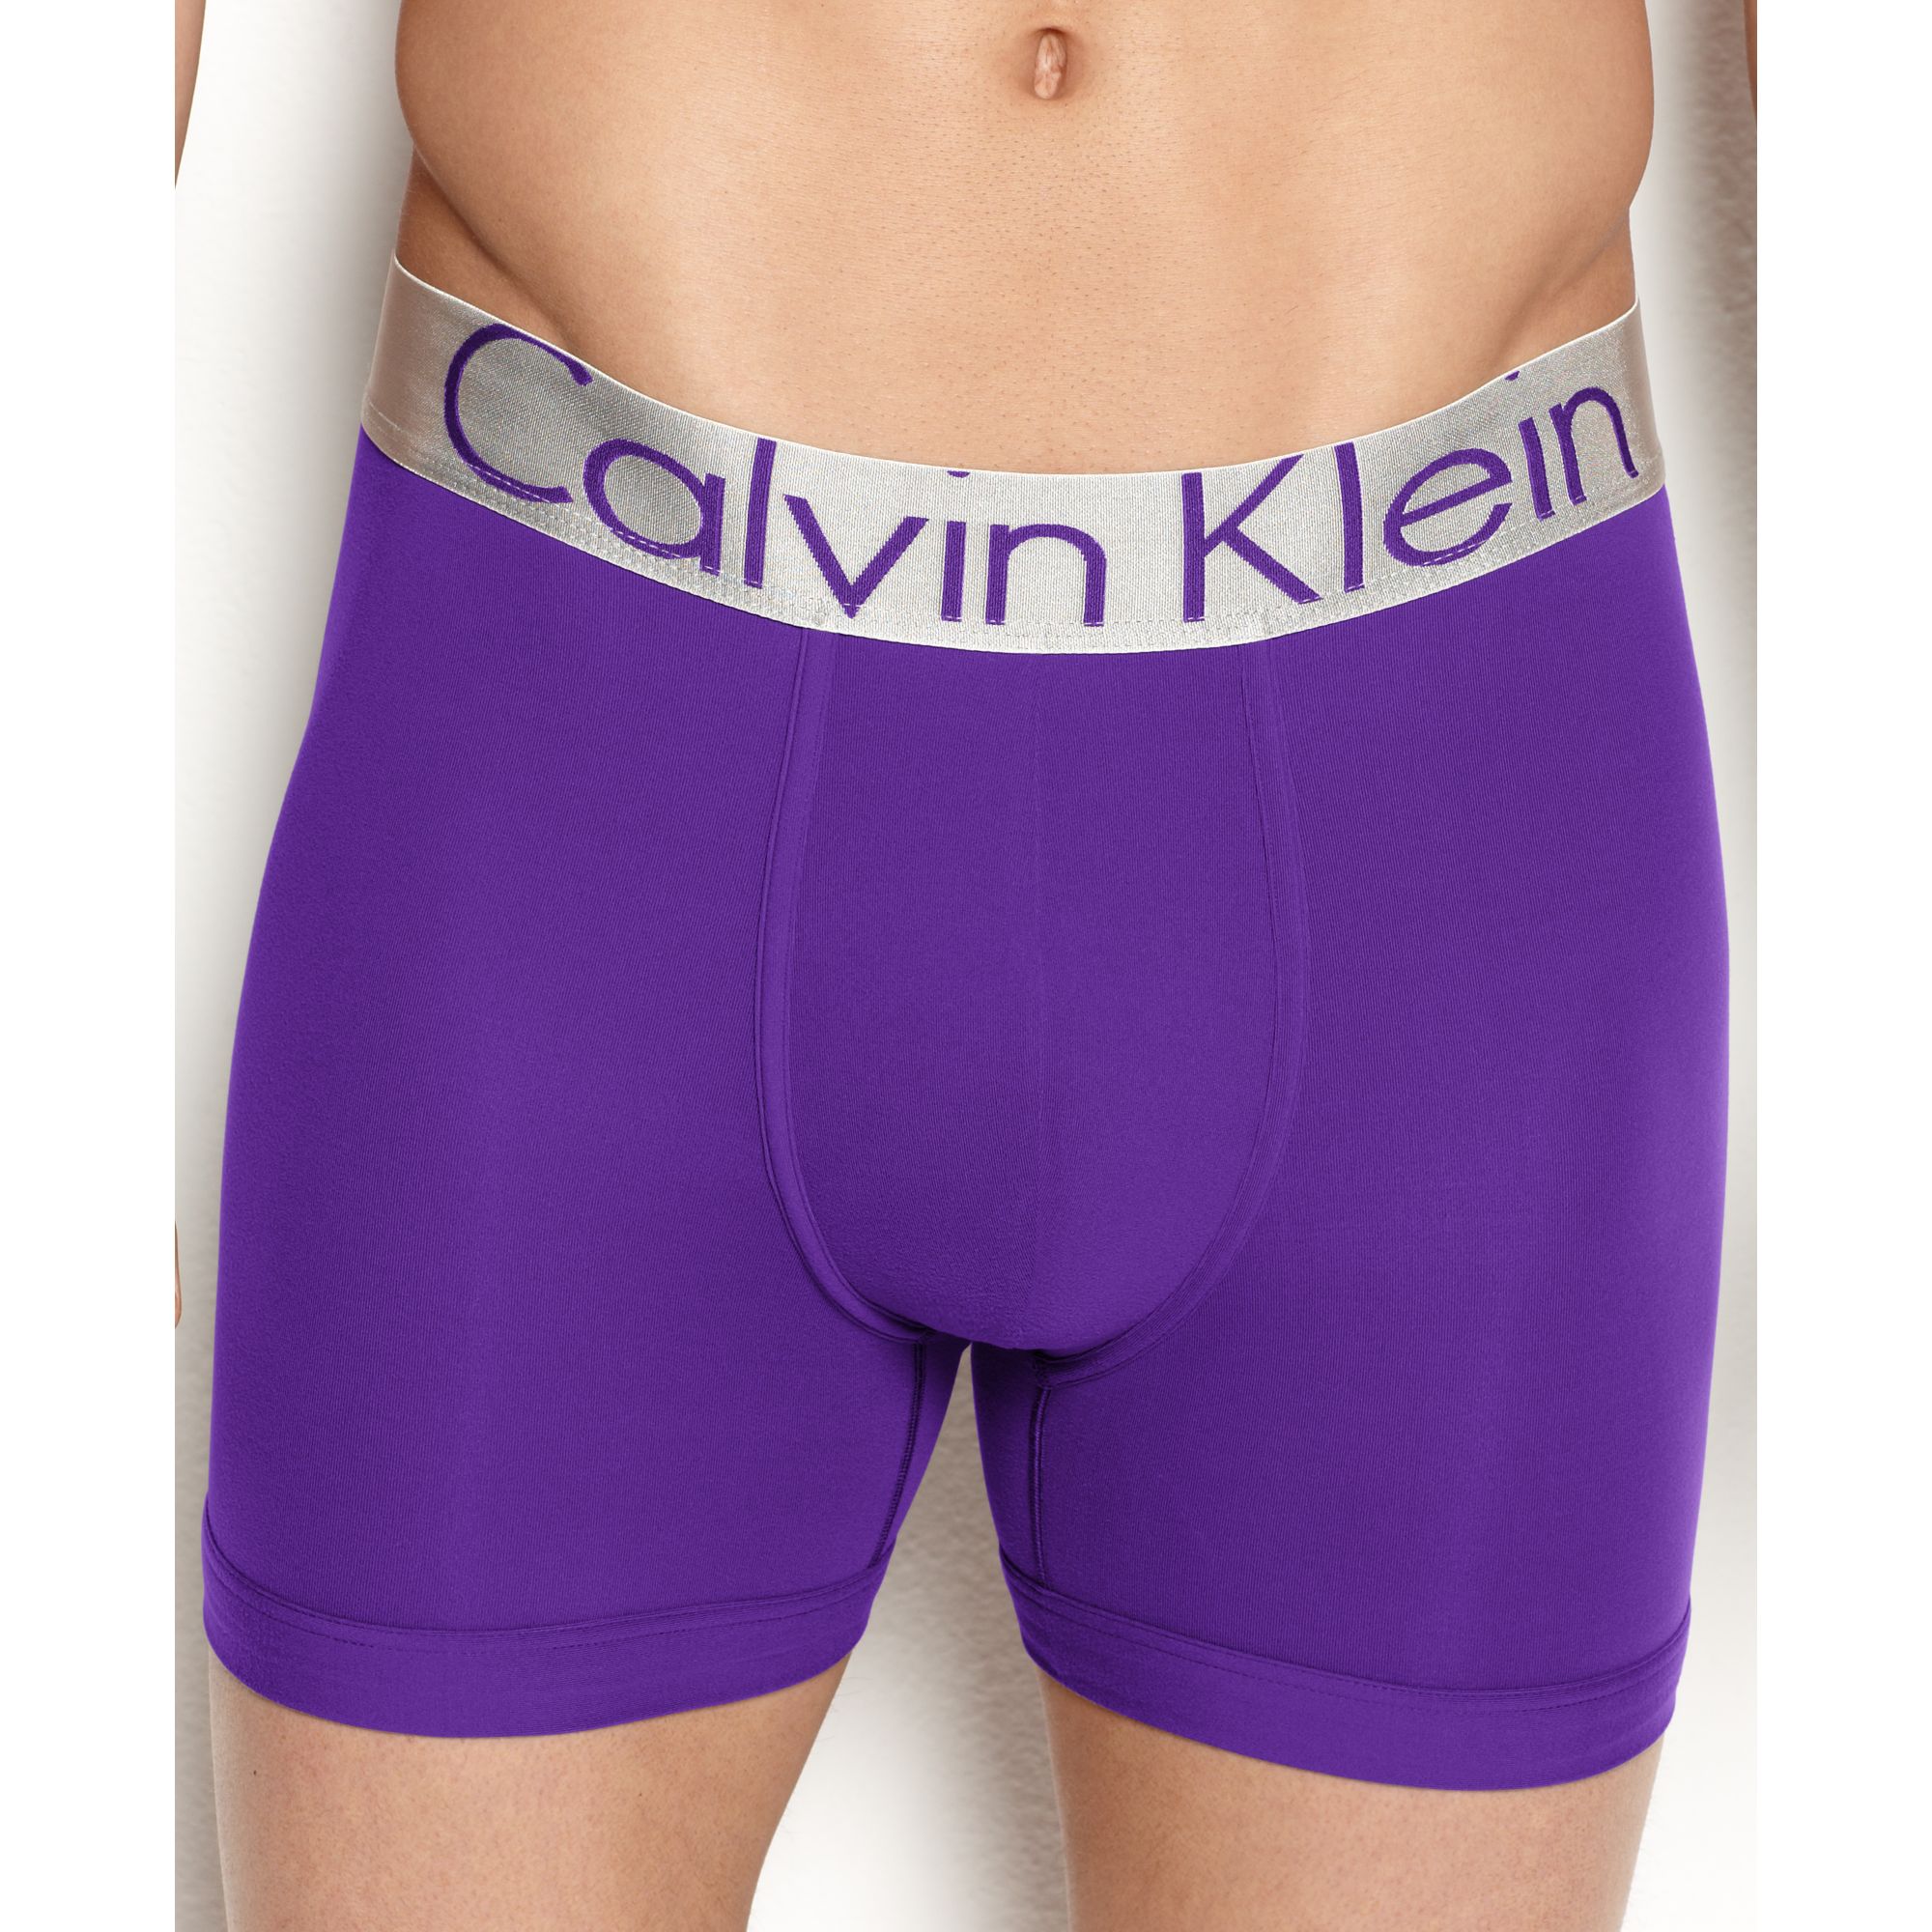 Calvin Klein Steel Microfiber Boxer Brief in Purple for Men